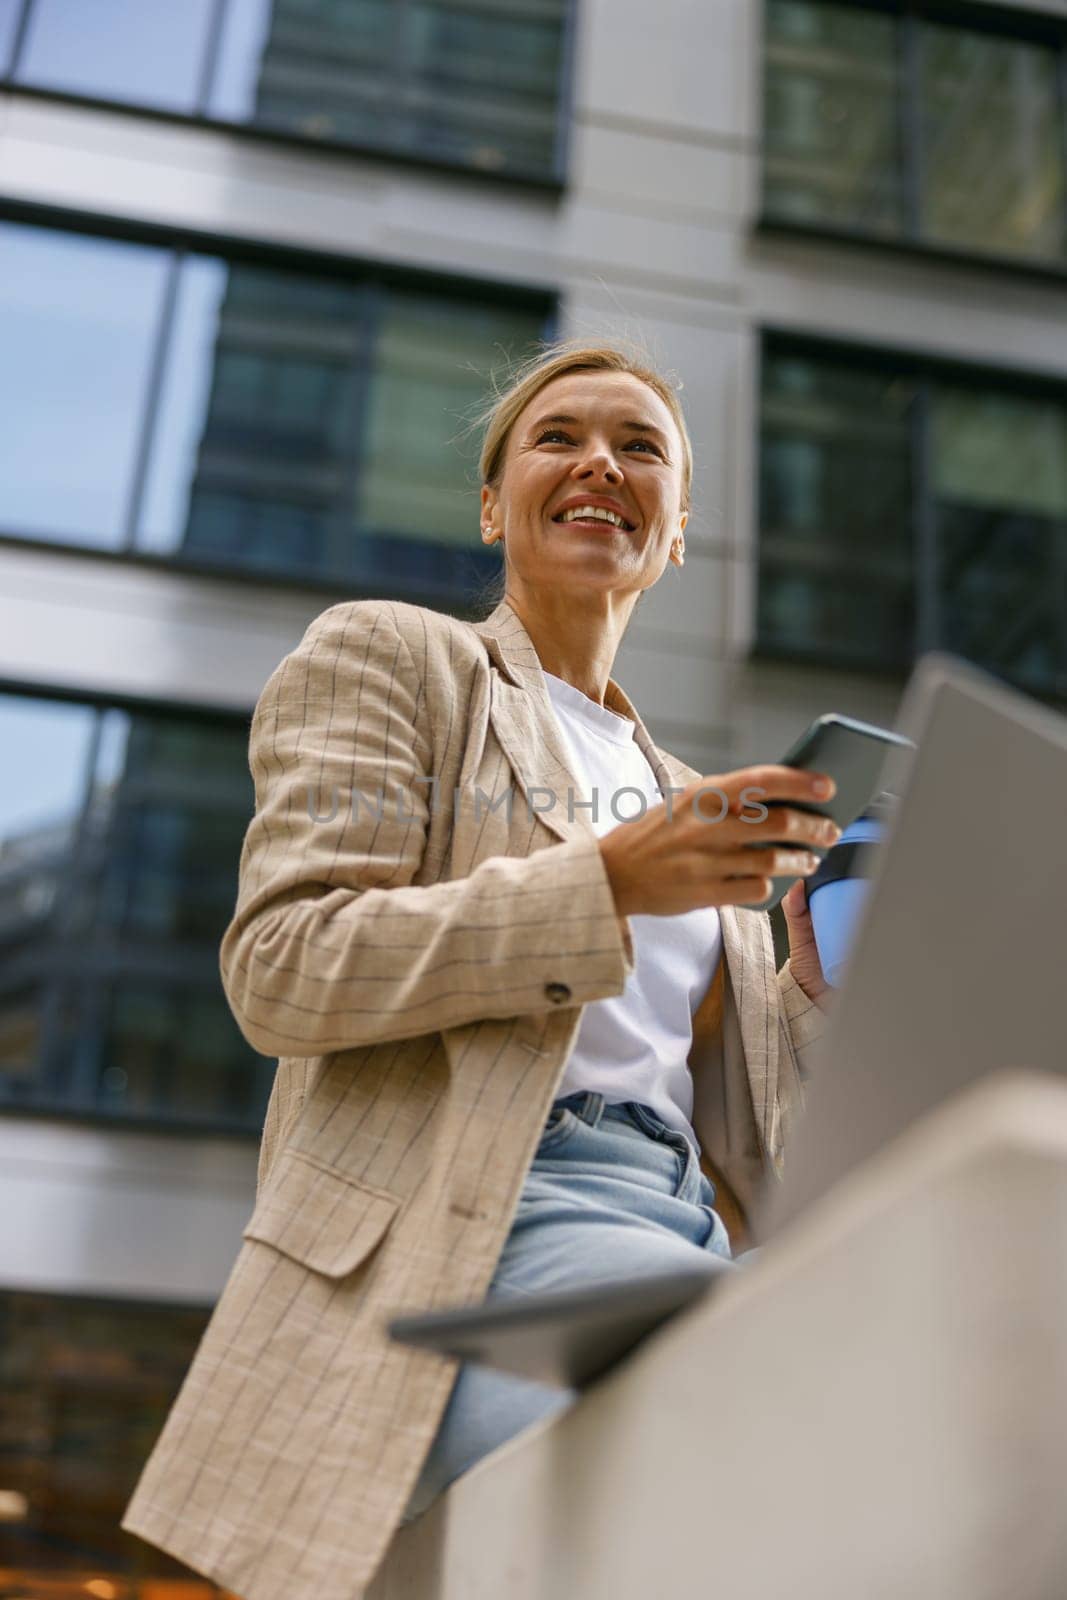 Smiling female entrepreneur use phone while working on laptop in modern office background by Yaroslav_astakhov